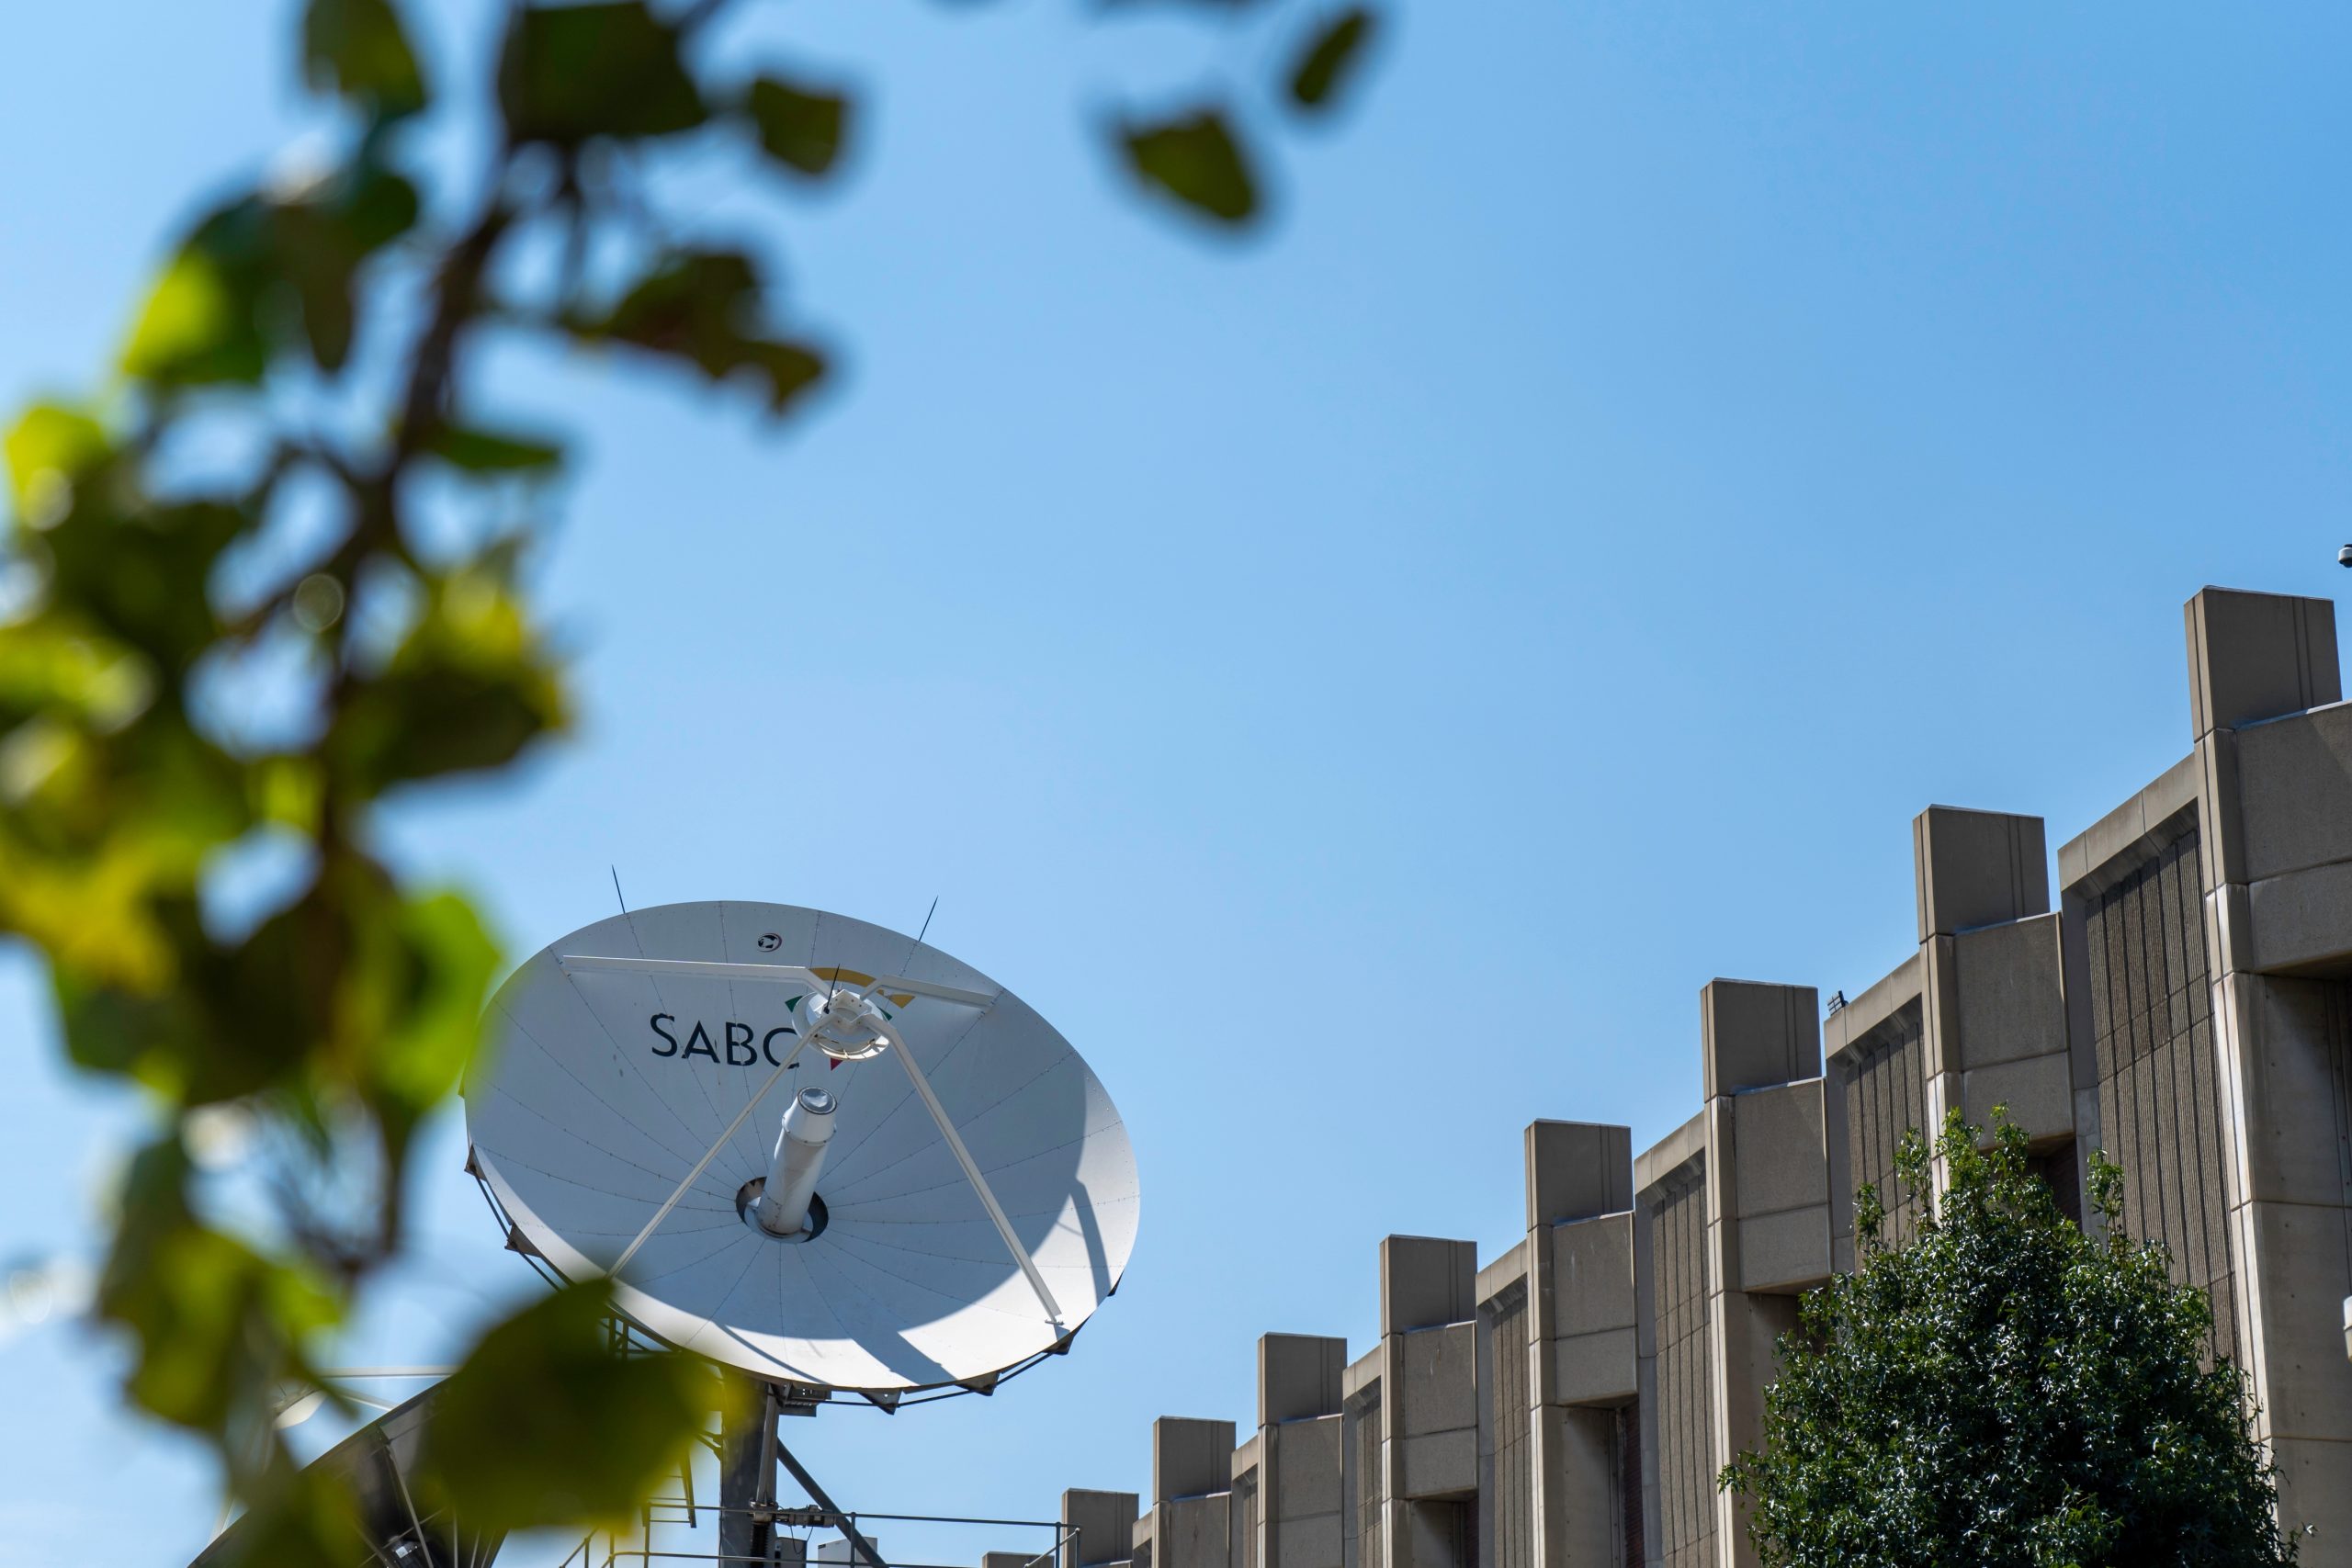 SABC-branded satellite against a blue sky.